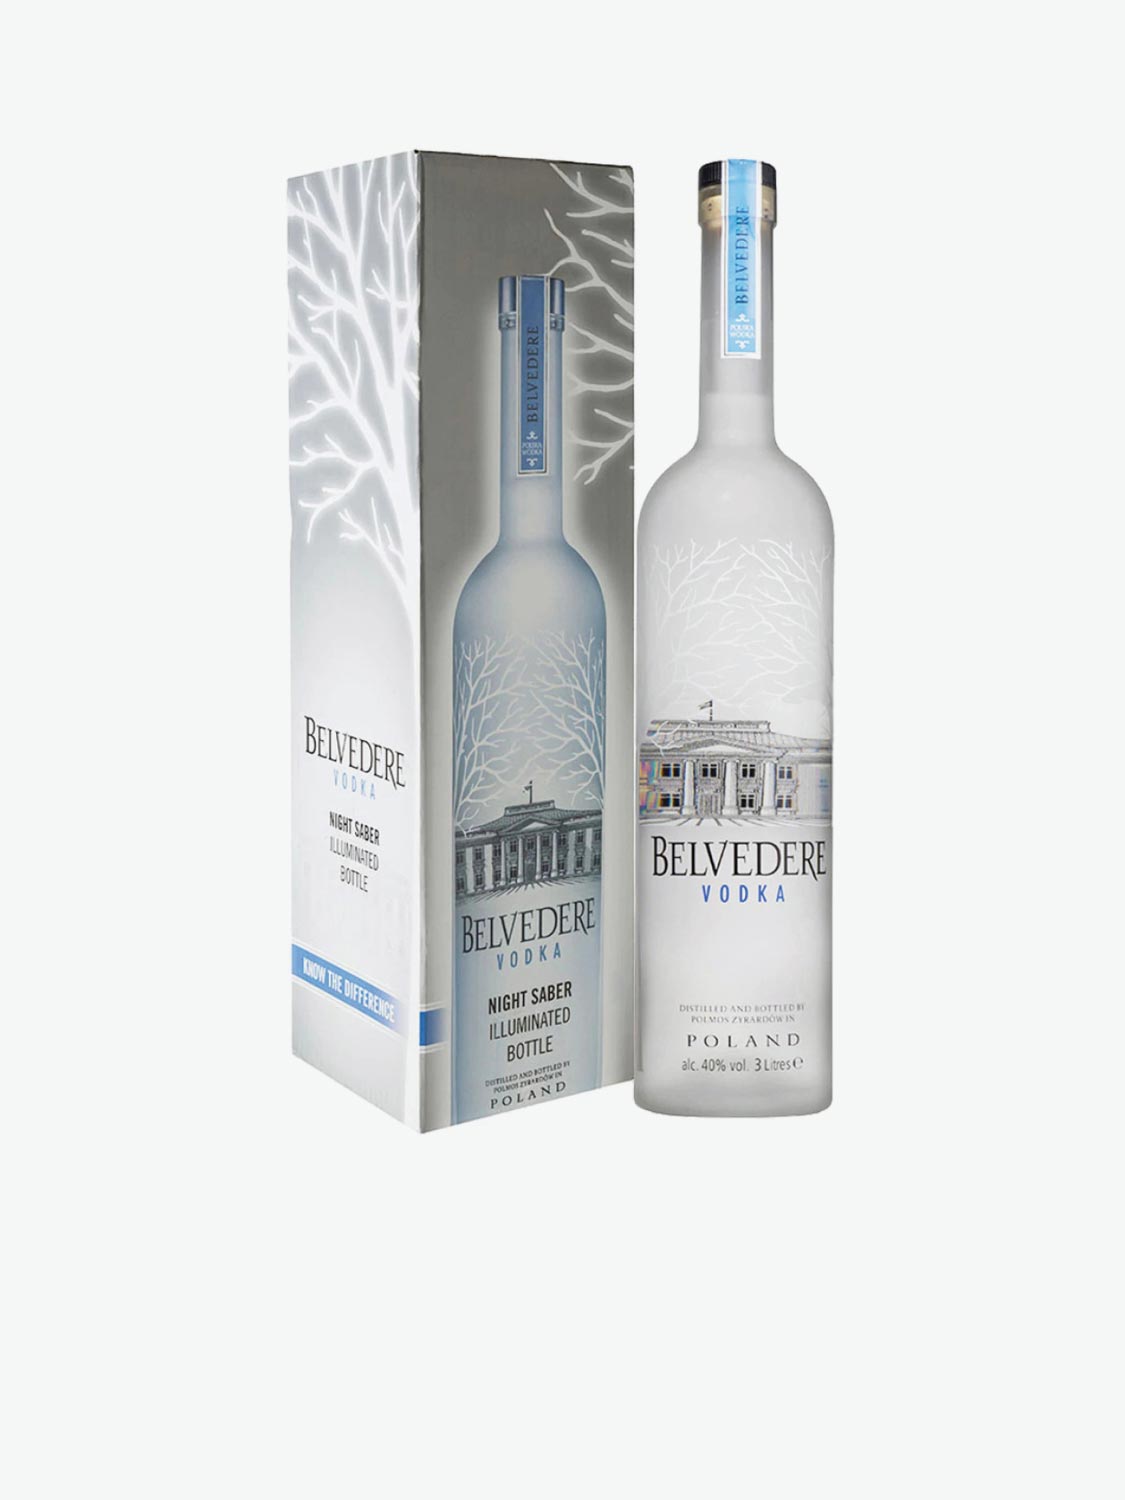 Belvedere Vodka Review  VodkaBuzz: Vodka Ratings and Vodka Reviews